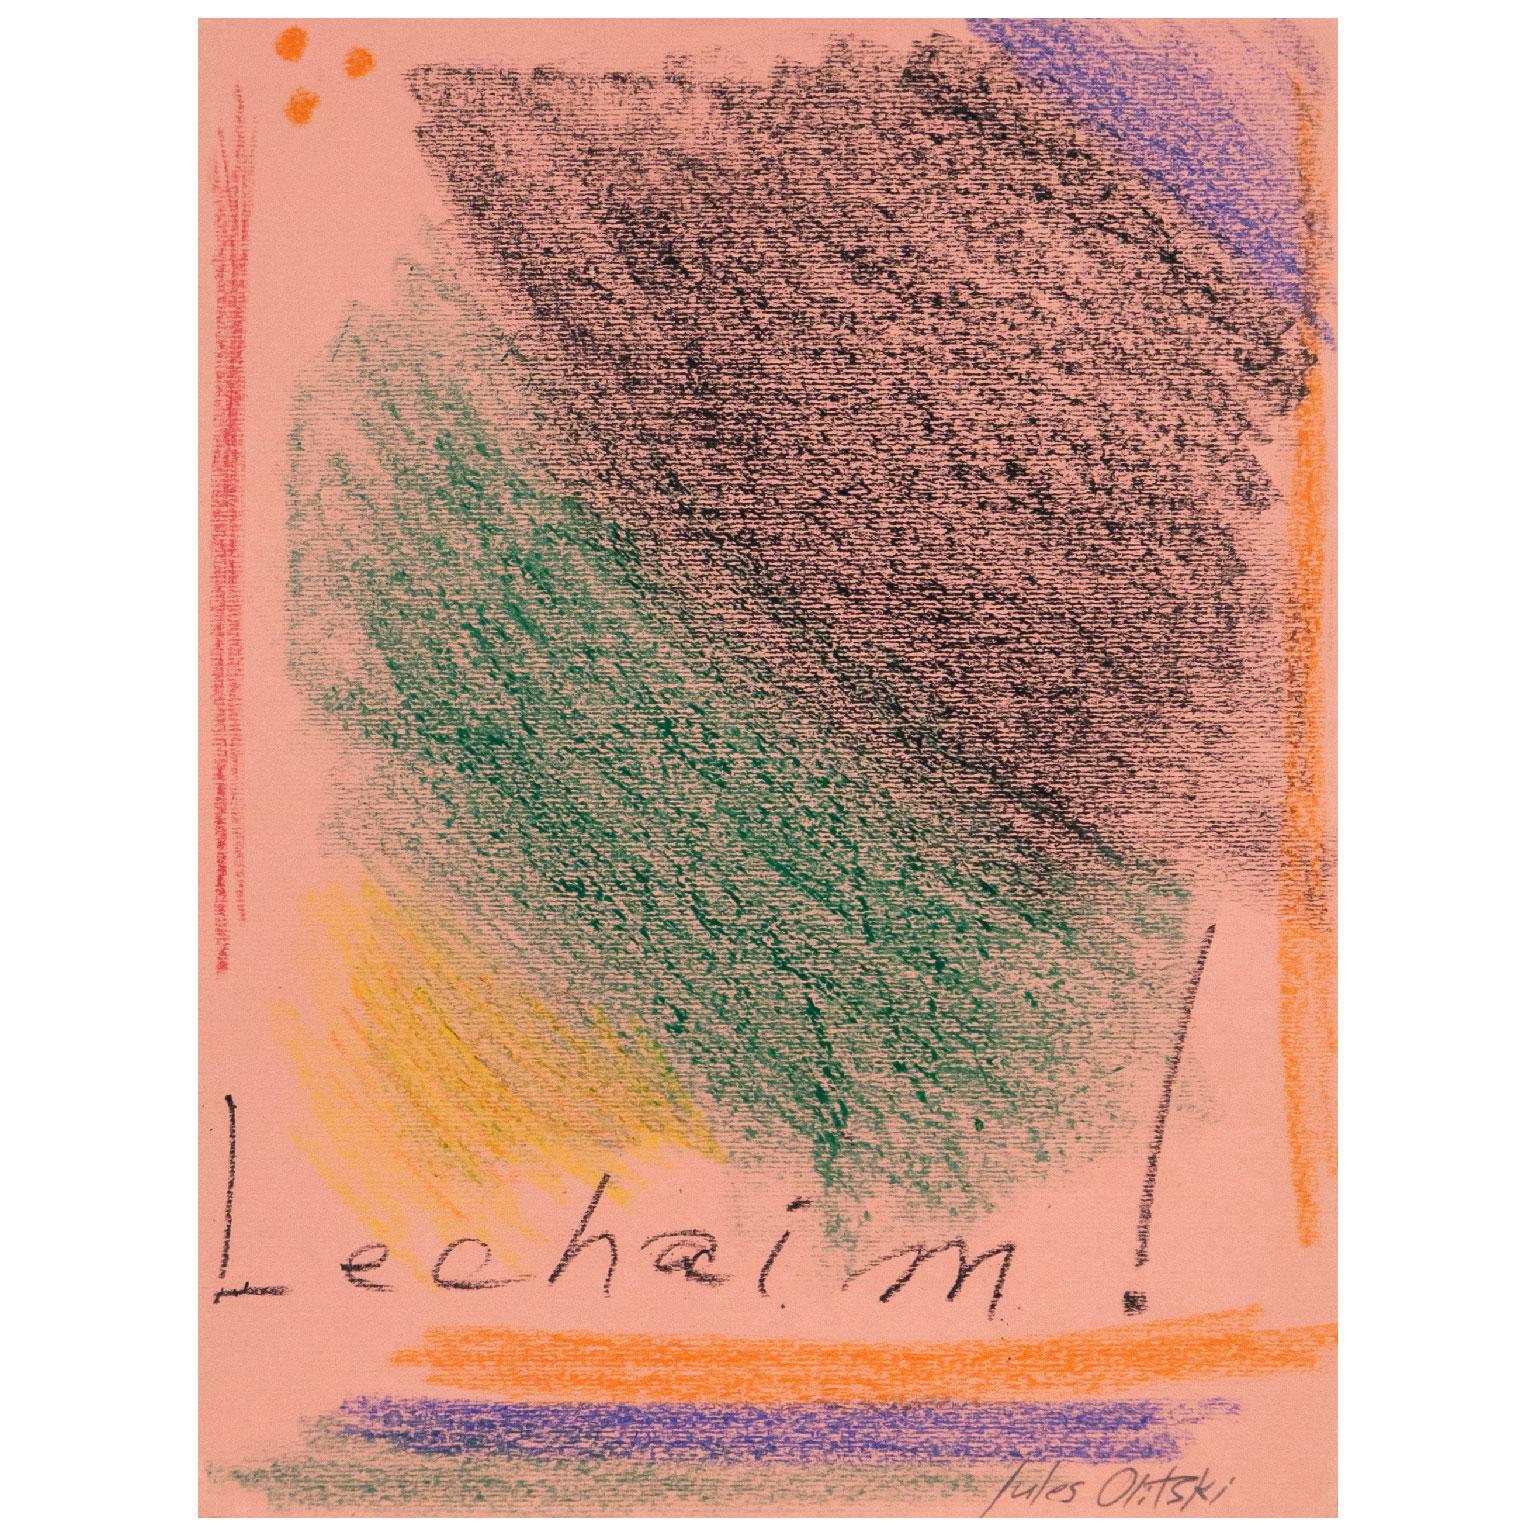 Lechaim! - Art by Jules Olitski